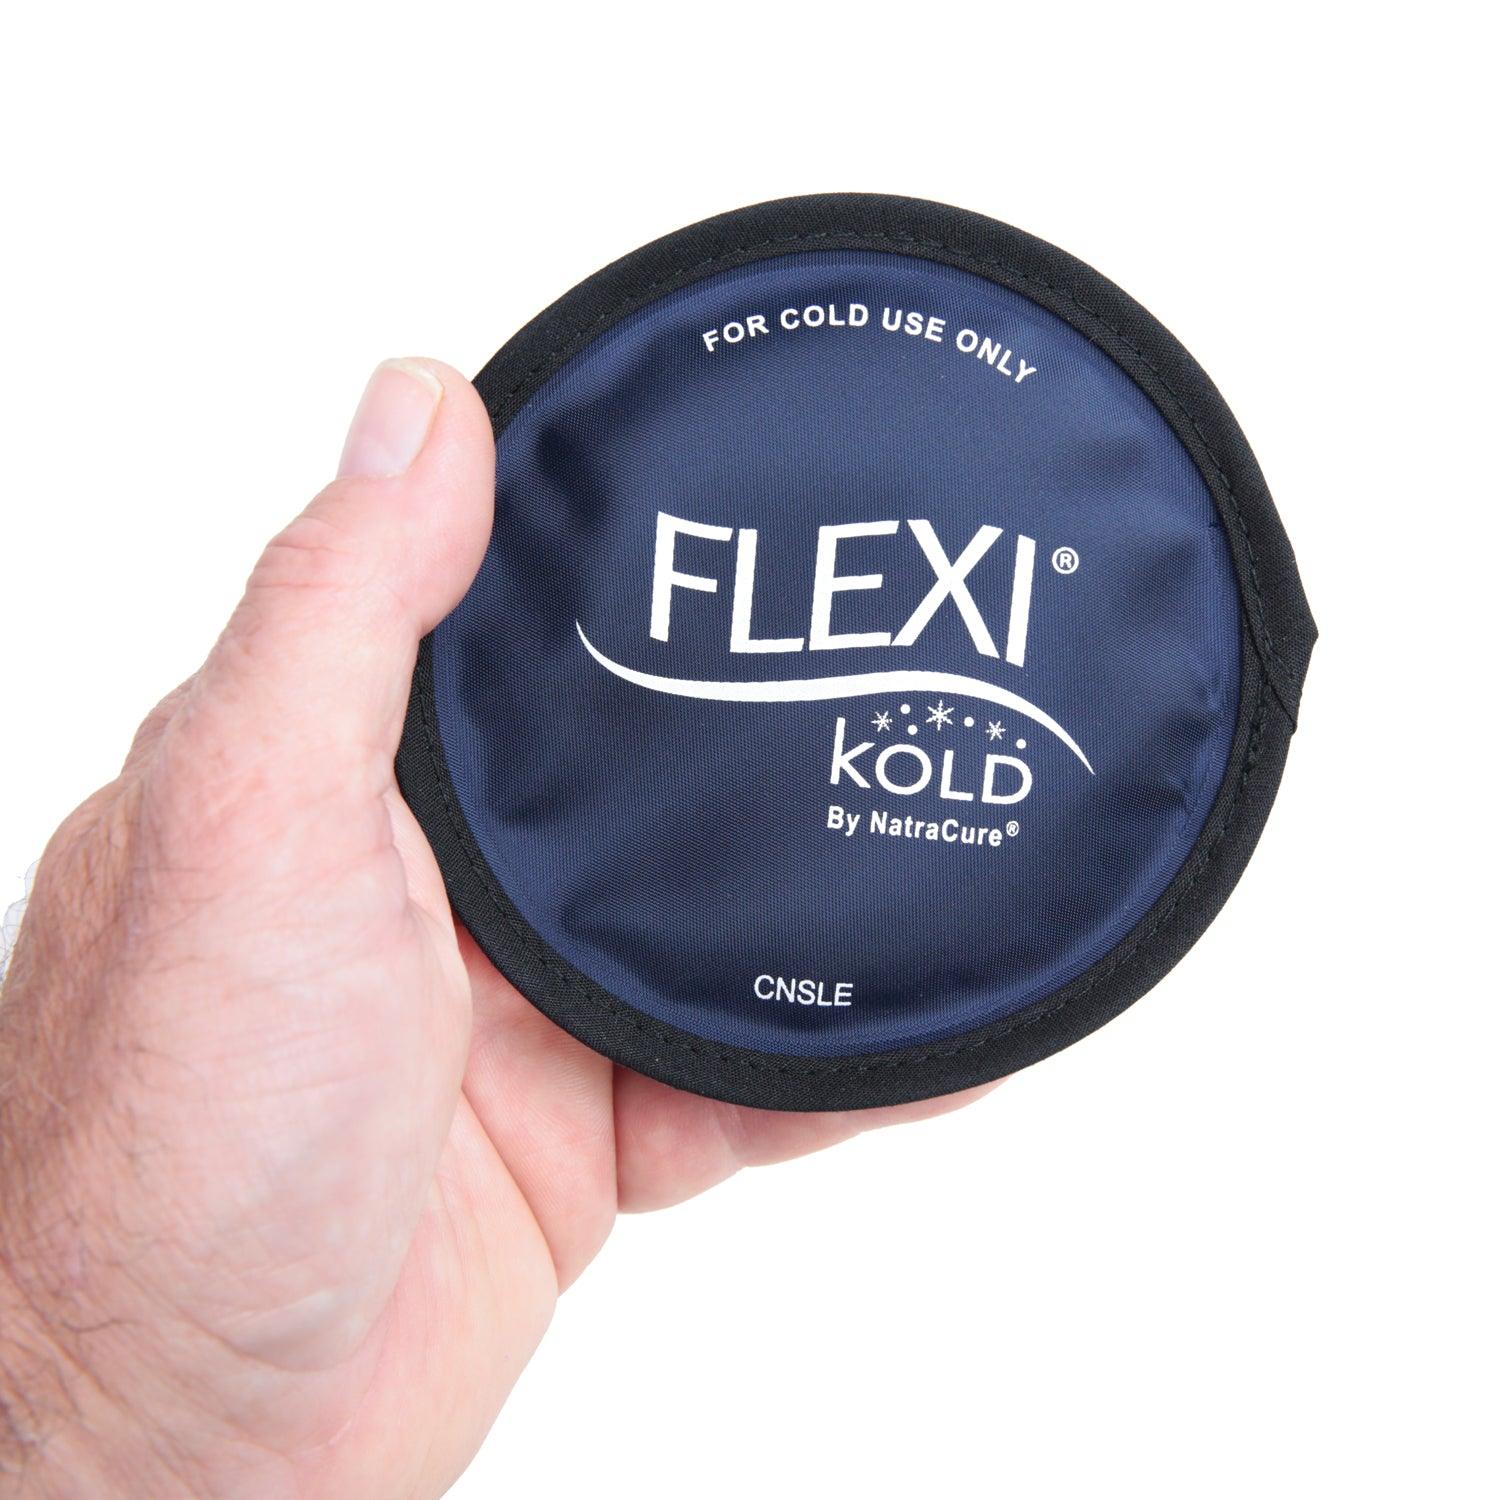 FlexiKold circle get ice pack